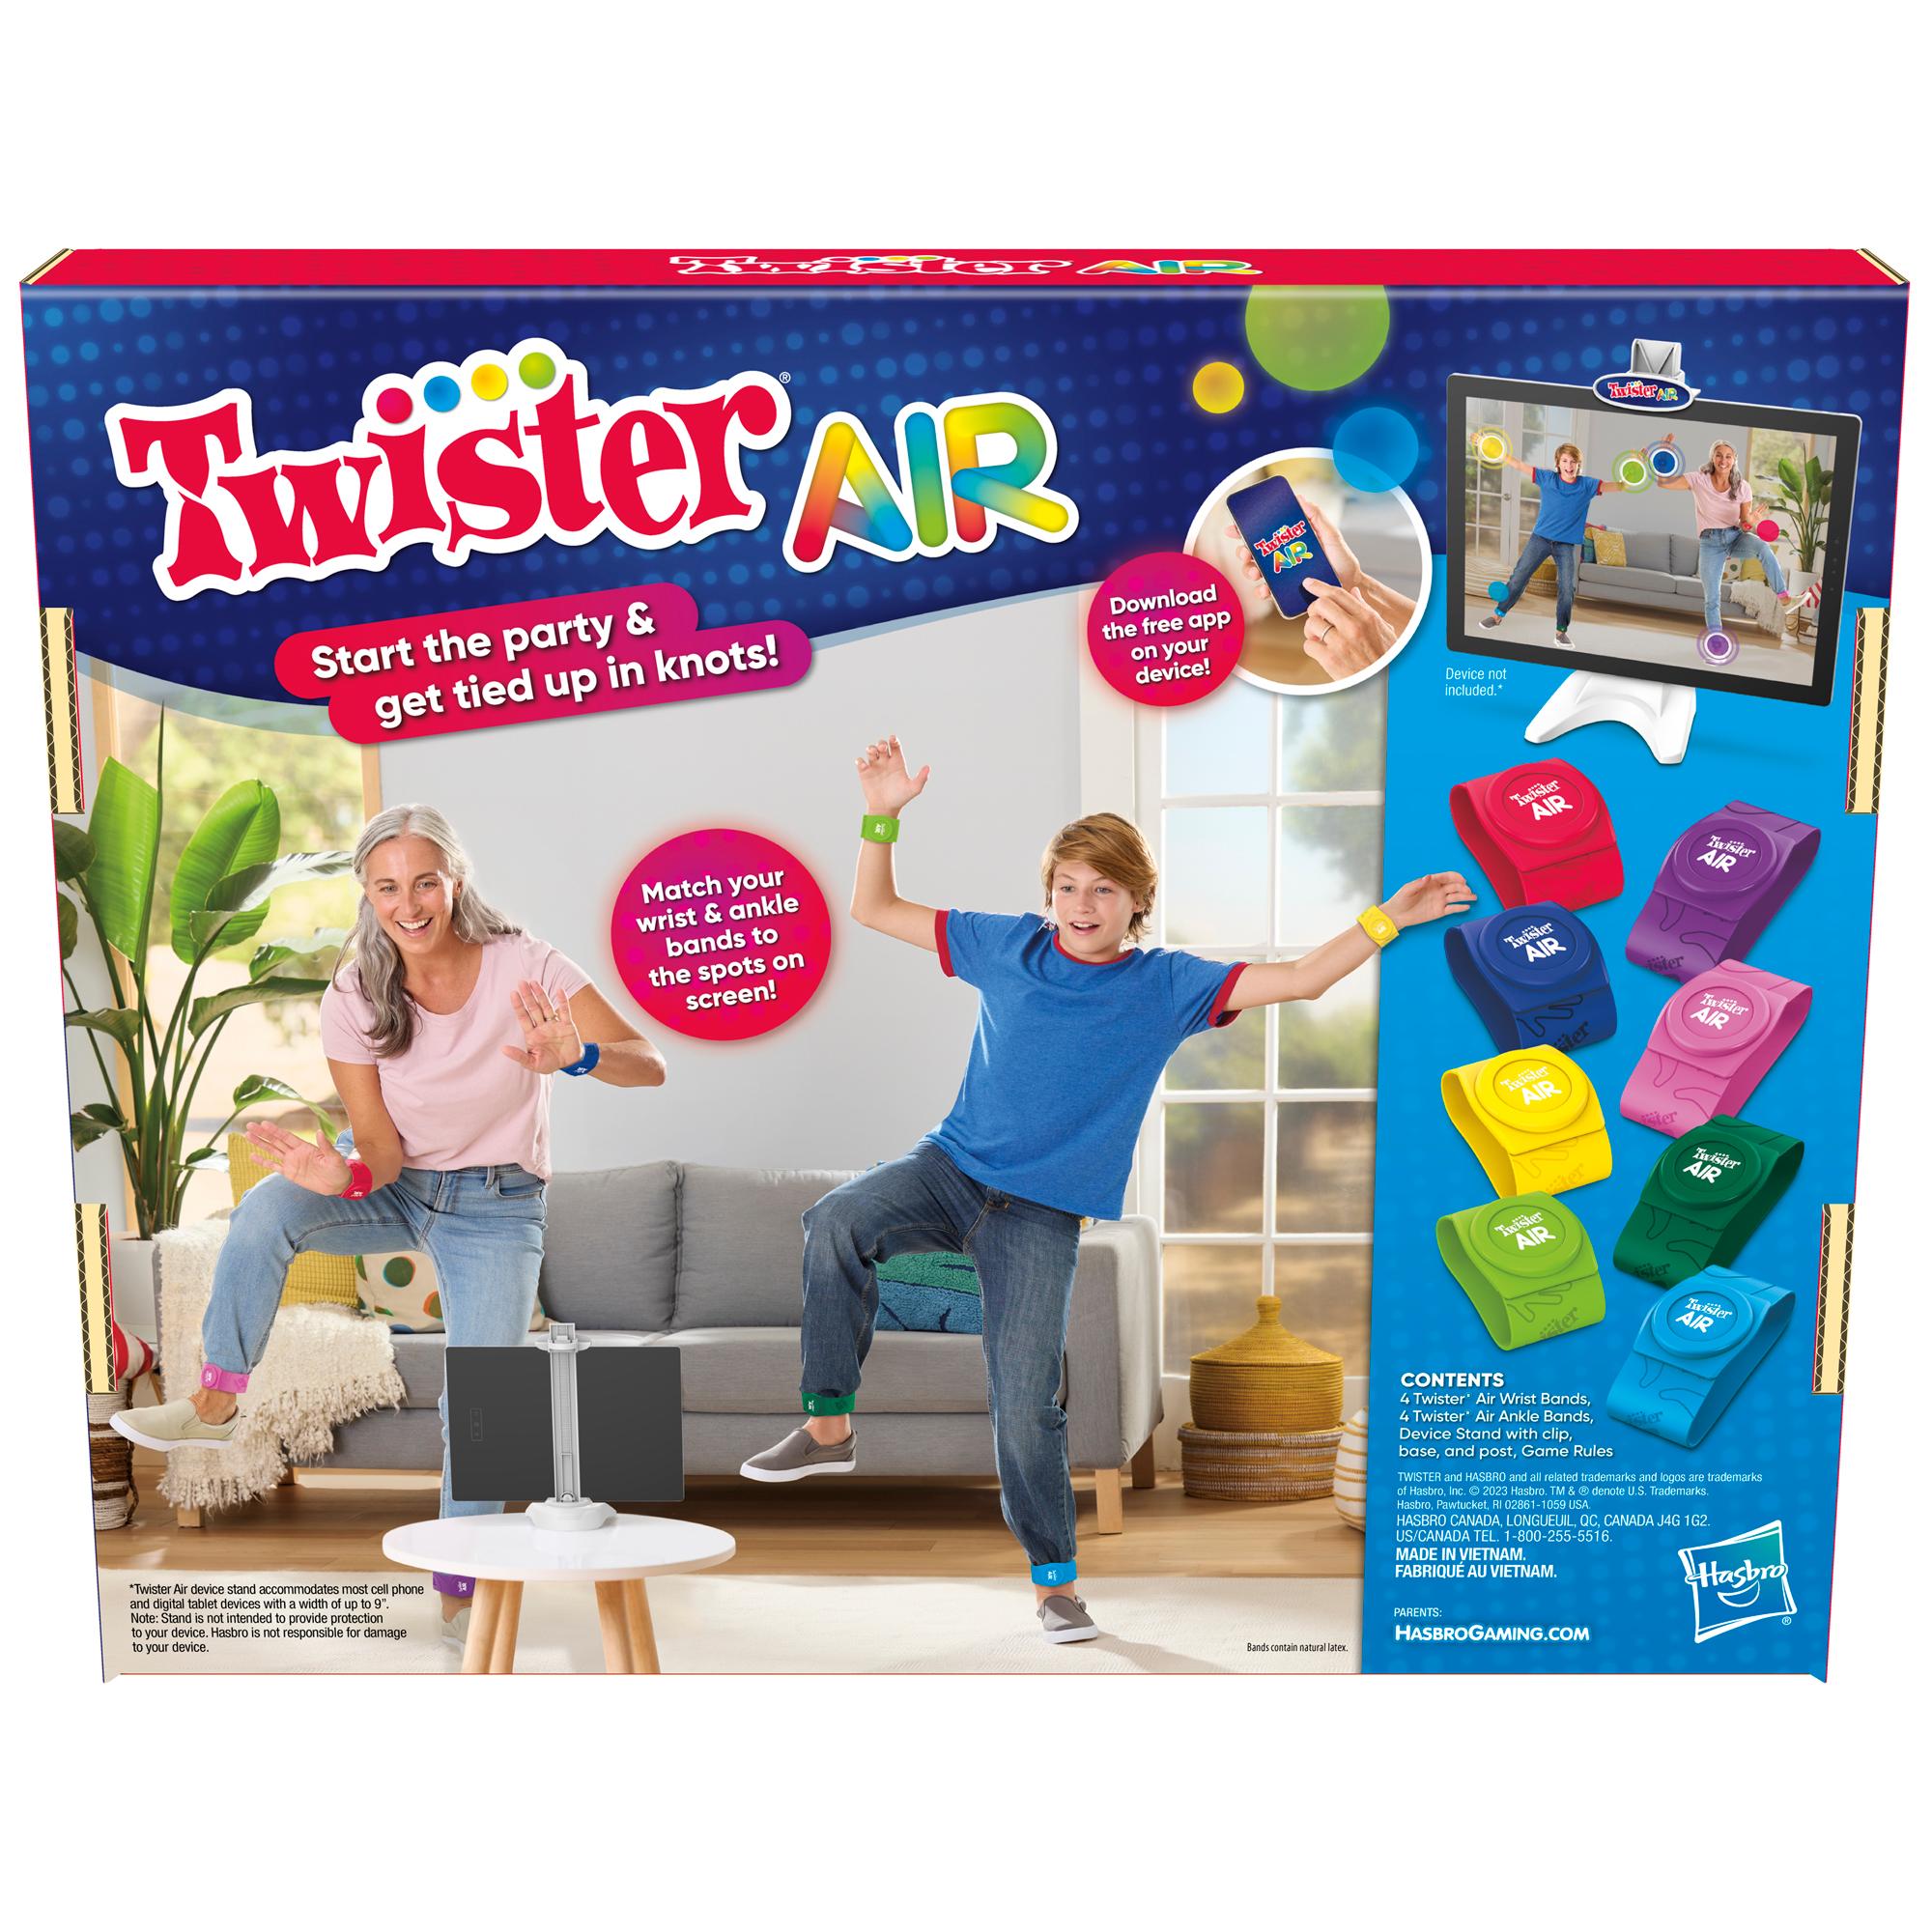 Twister Junior 